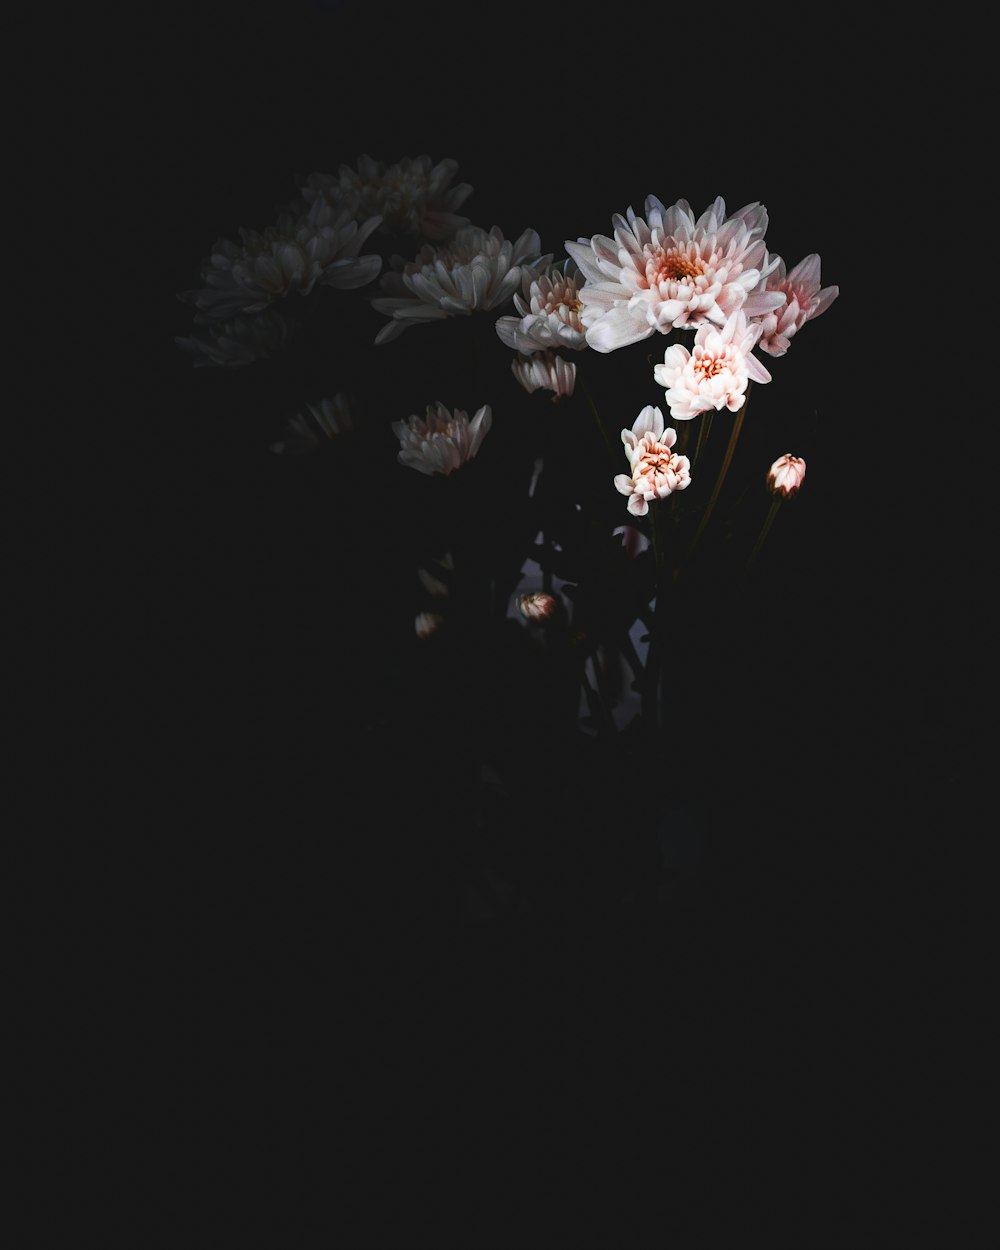 Flower On Dark Background Pictures Download Free Images On Unsplash